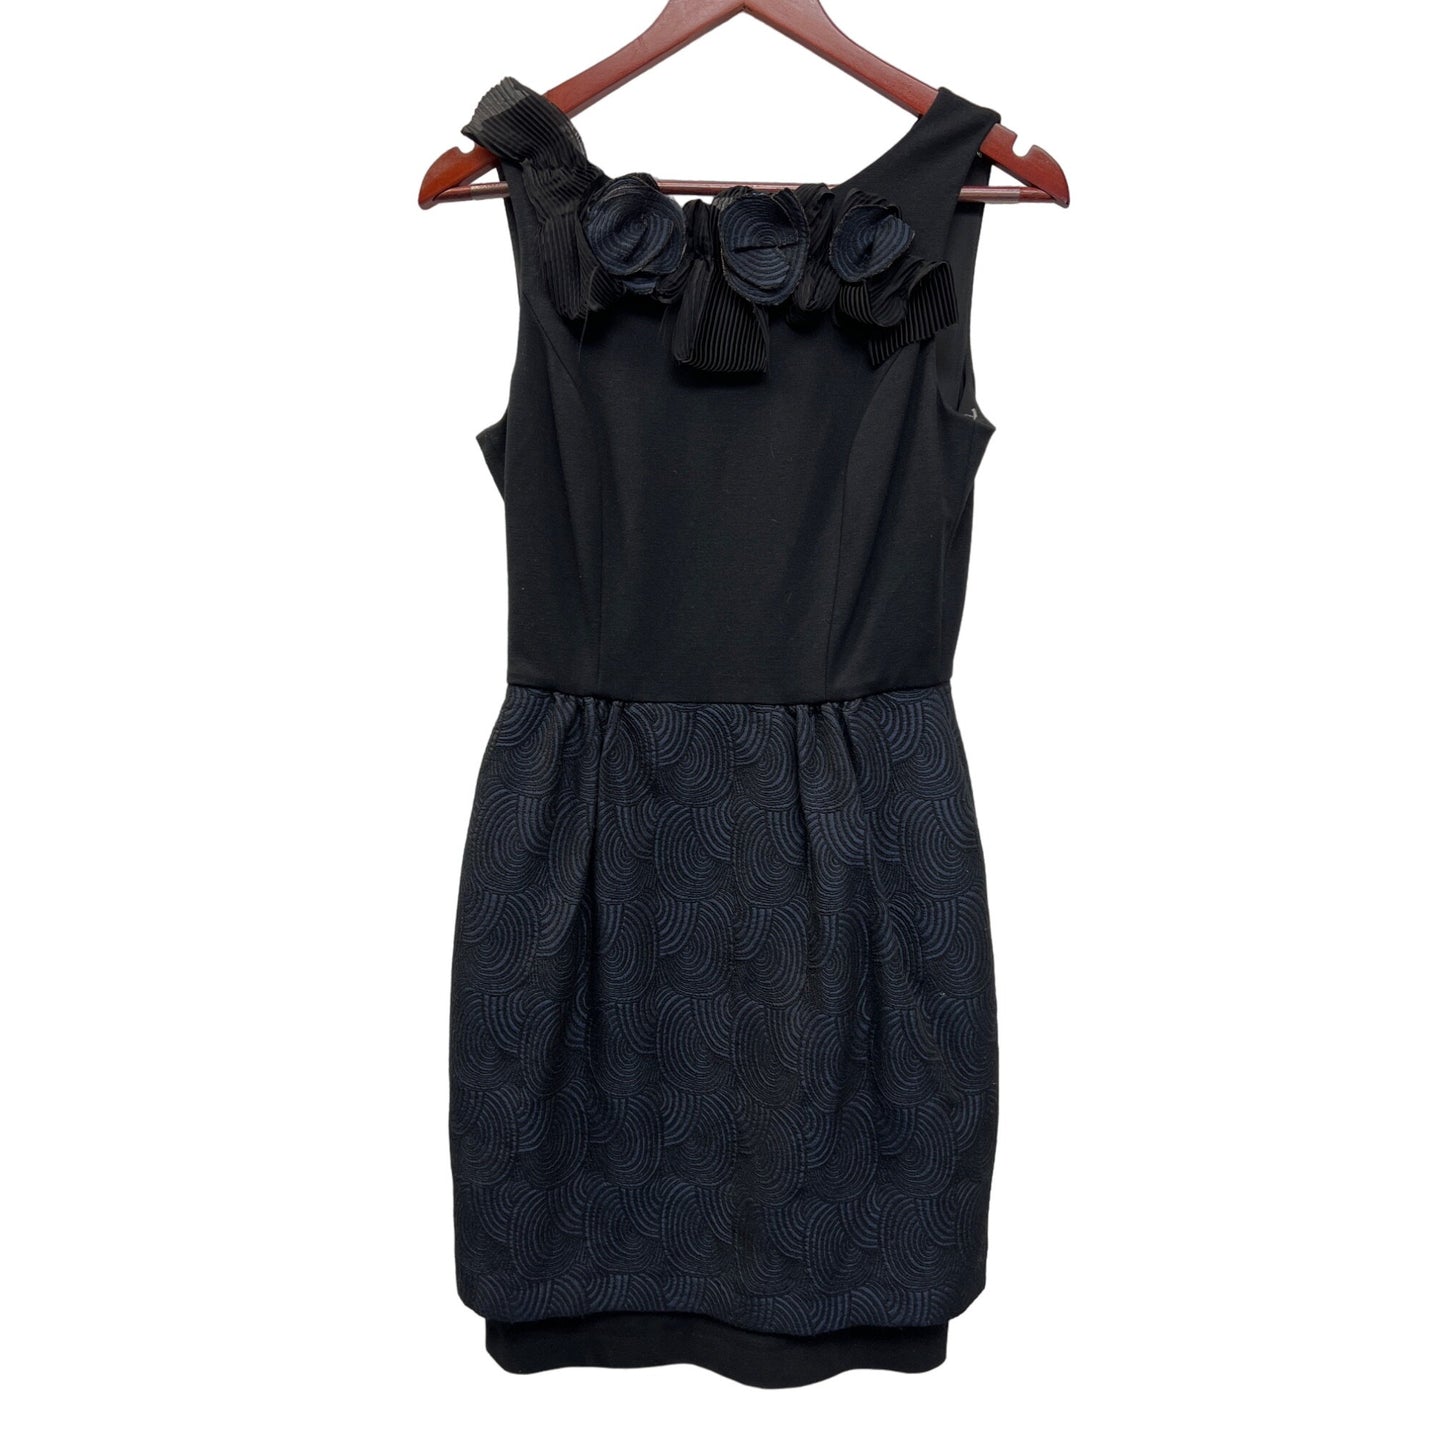 Taylor Navy and Black Swirl Design Sleeveless Sheath Dress